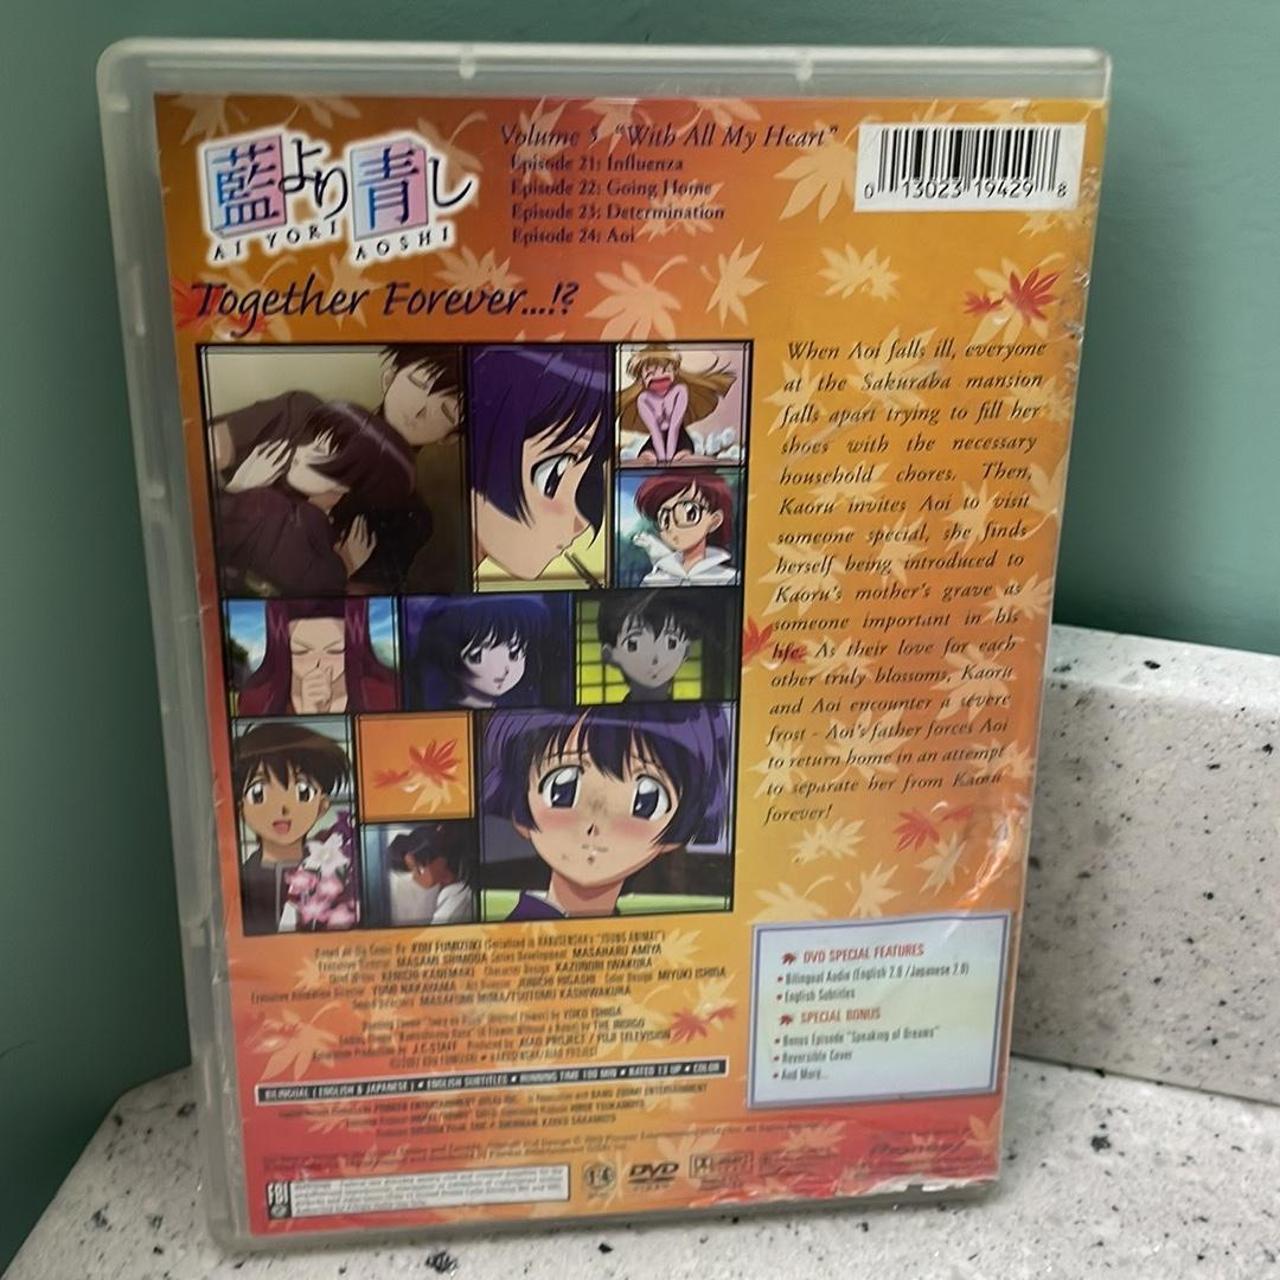 AI YORI AOSHI Anime DVD set includes volume 1 - Depop